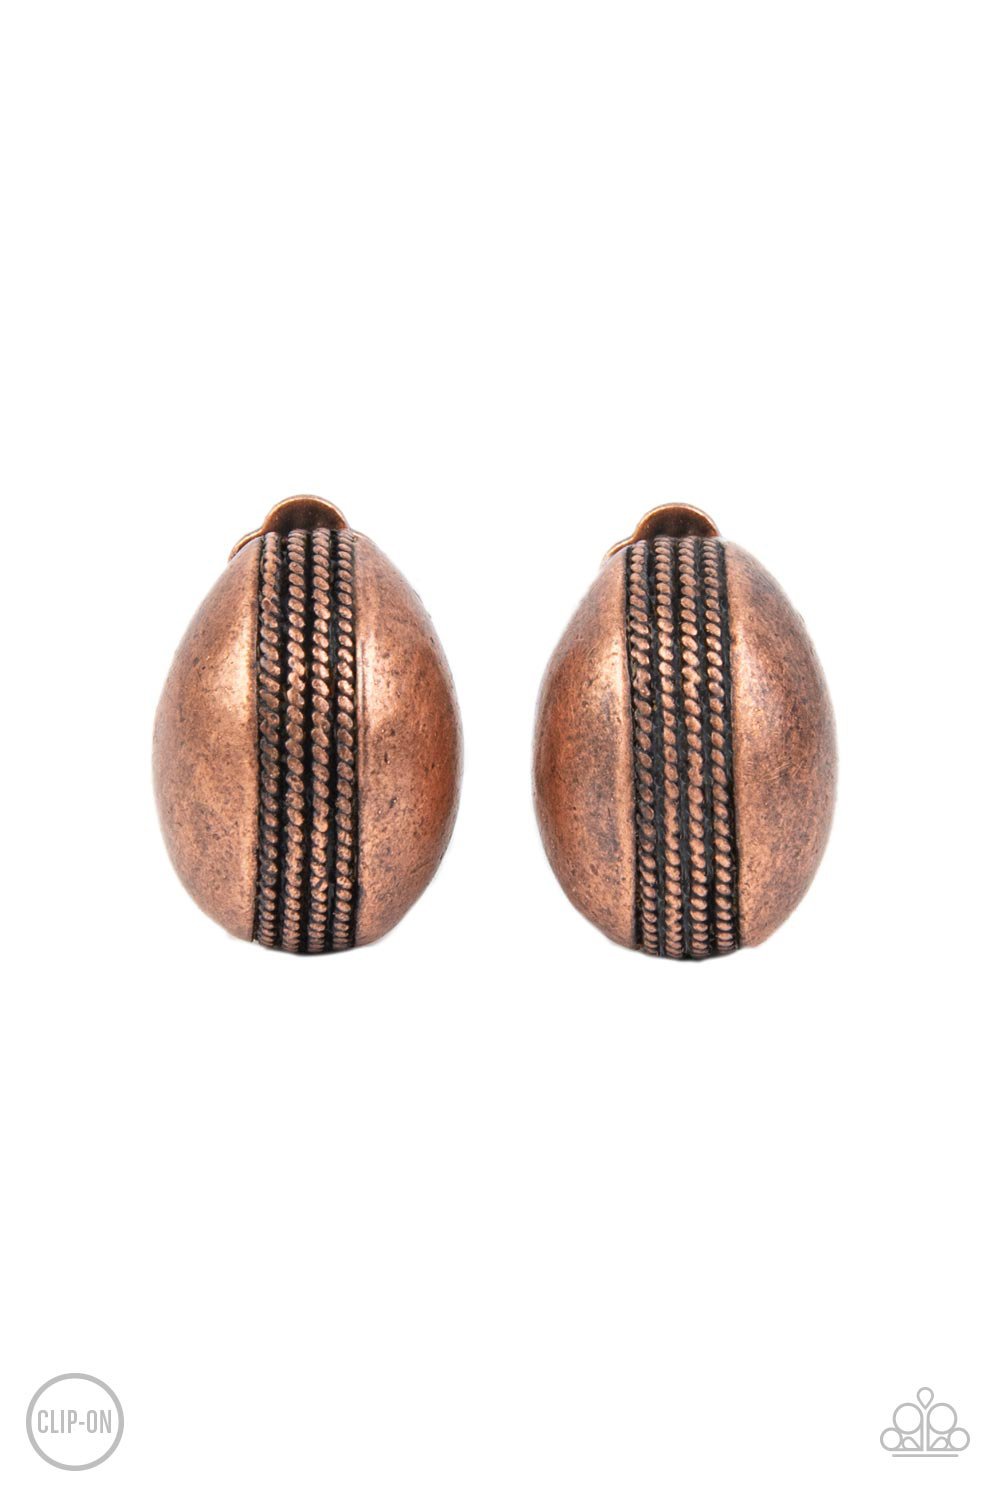 Classic Curves - Copper Clip On Earring freeshipping - JewLz4u Gemstone Gallery